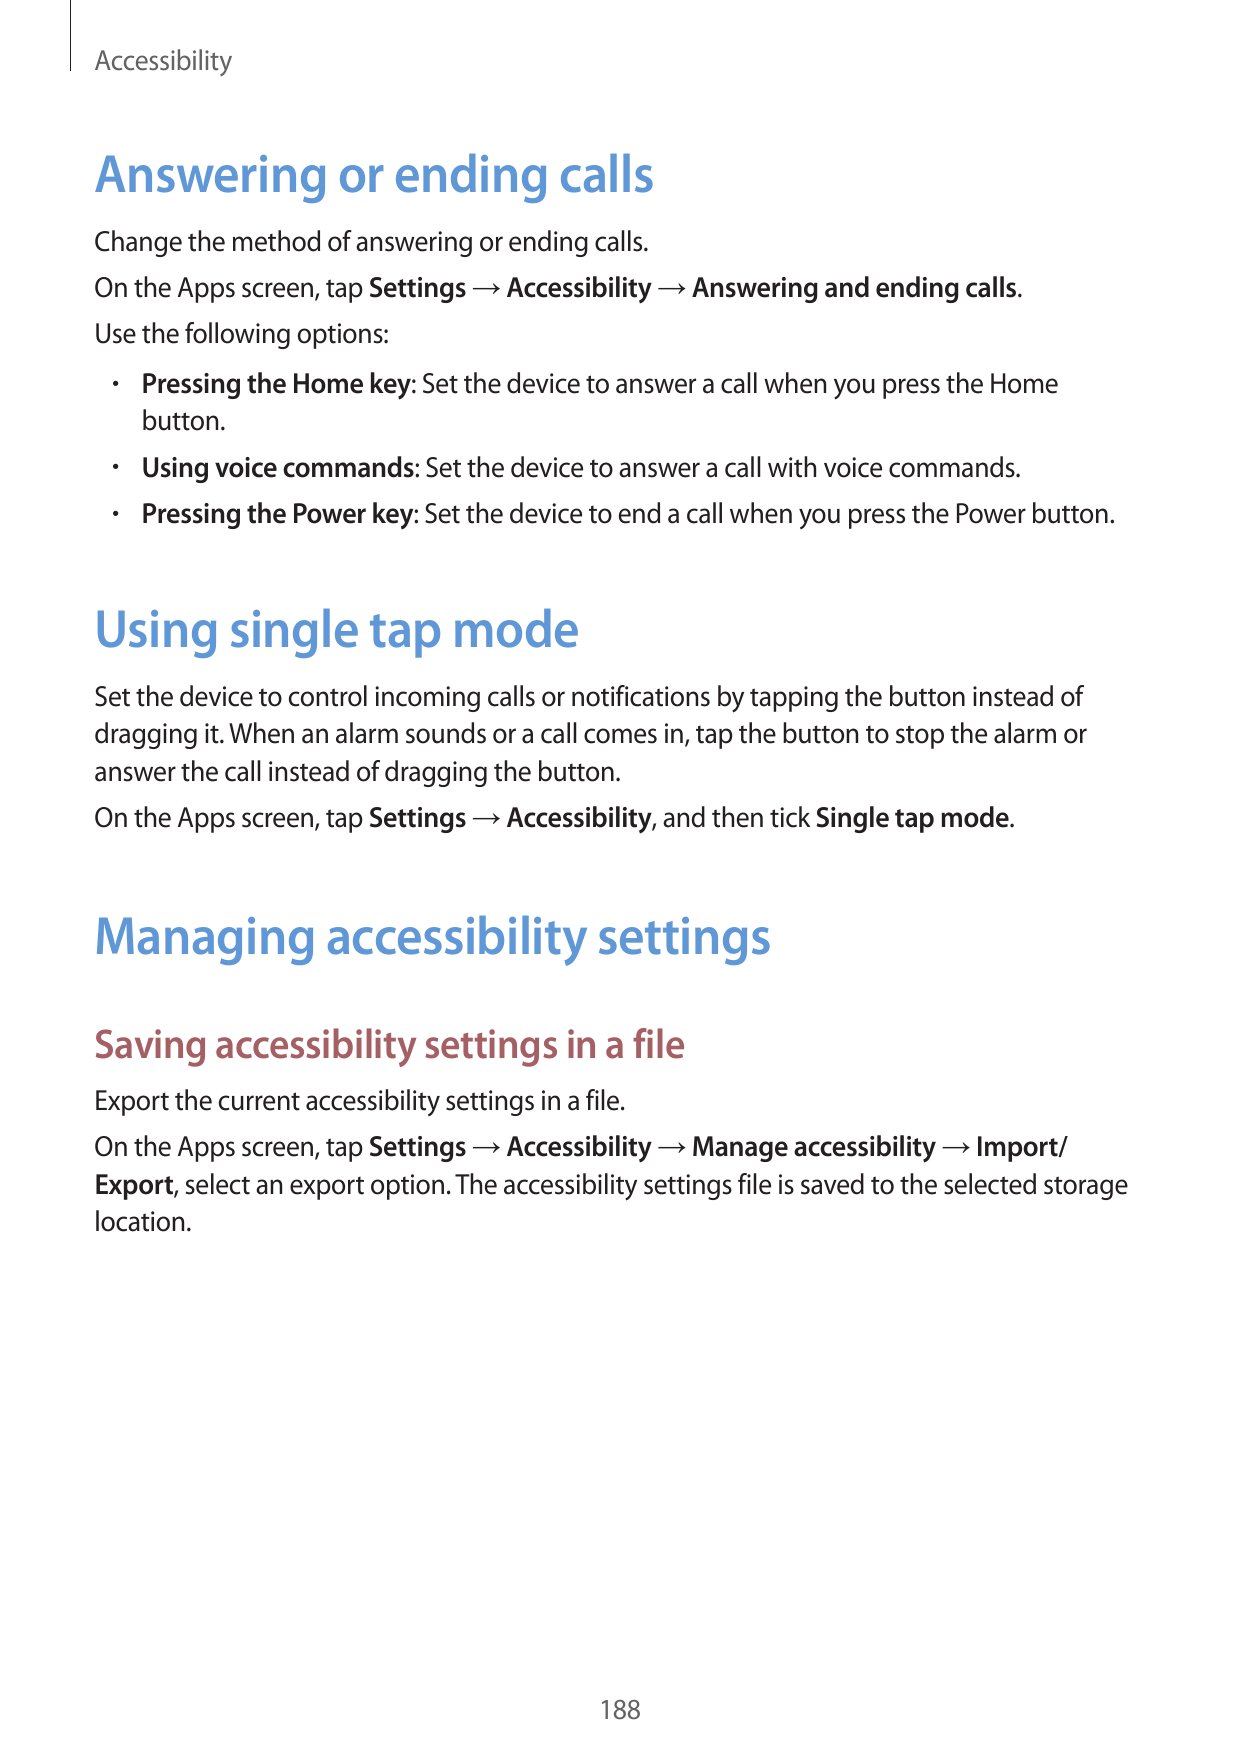 AccessibilityAnswering or ending callsChange the method of answering or ending calls.On the Apps screen, tap Settings → Accessib